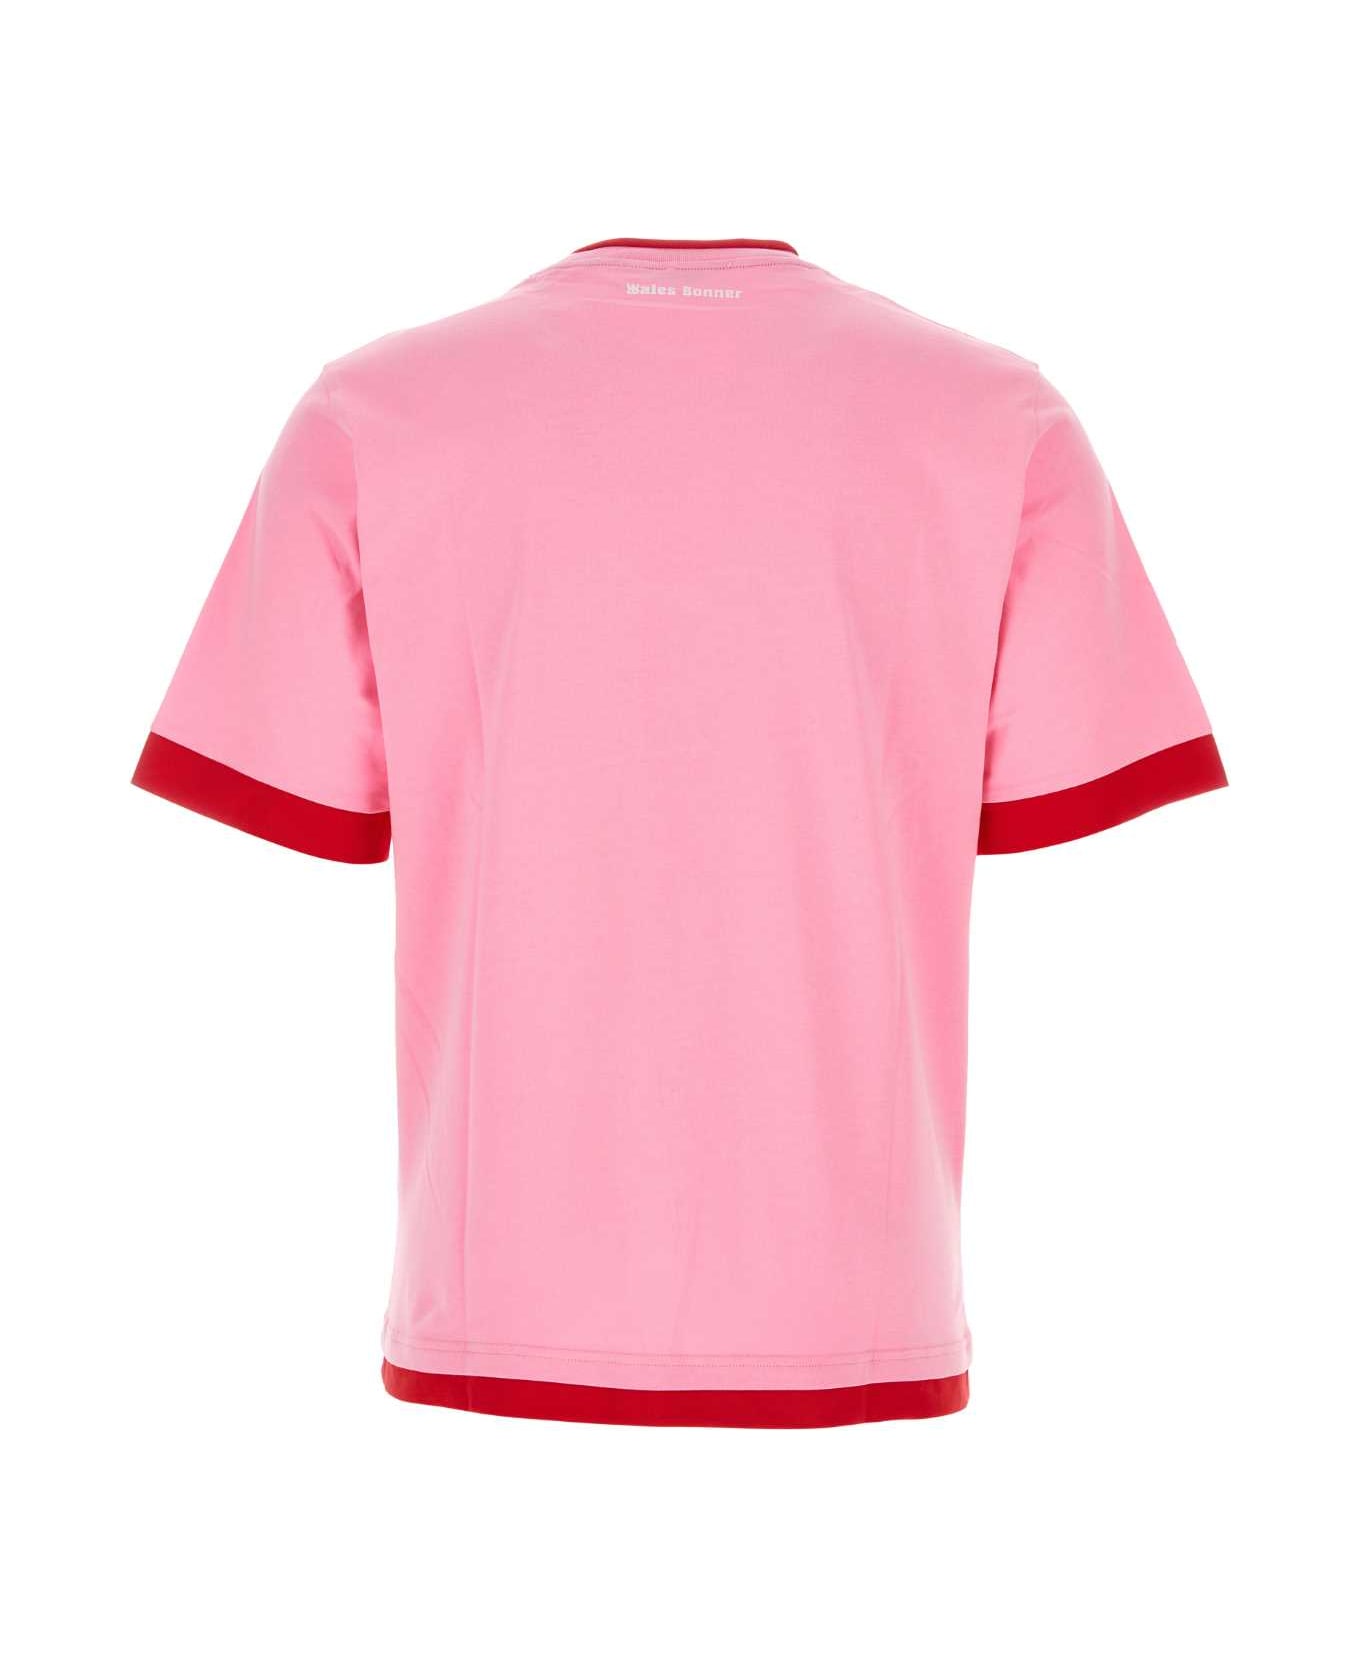 Wales Bonner Pink Cotton Marathon T-shirt - PINKANDRED